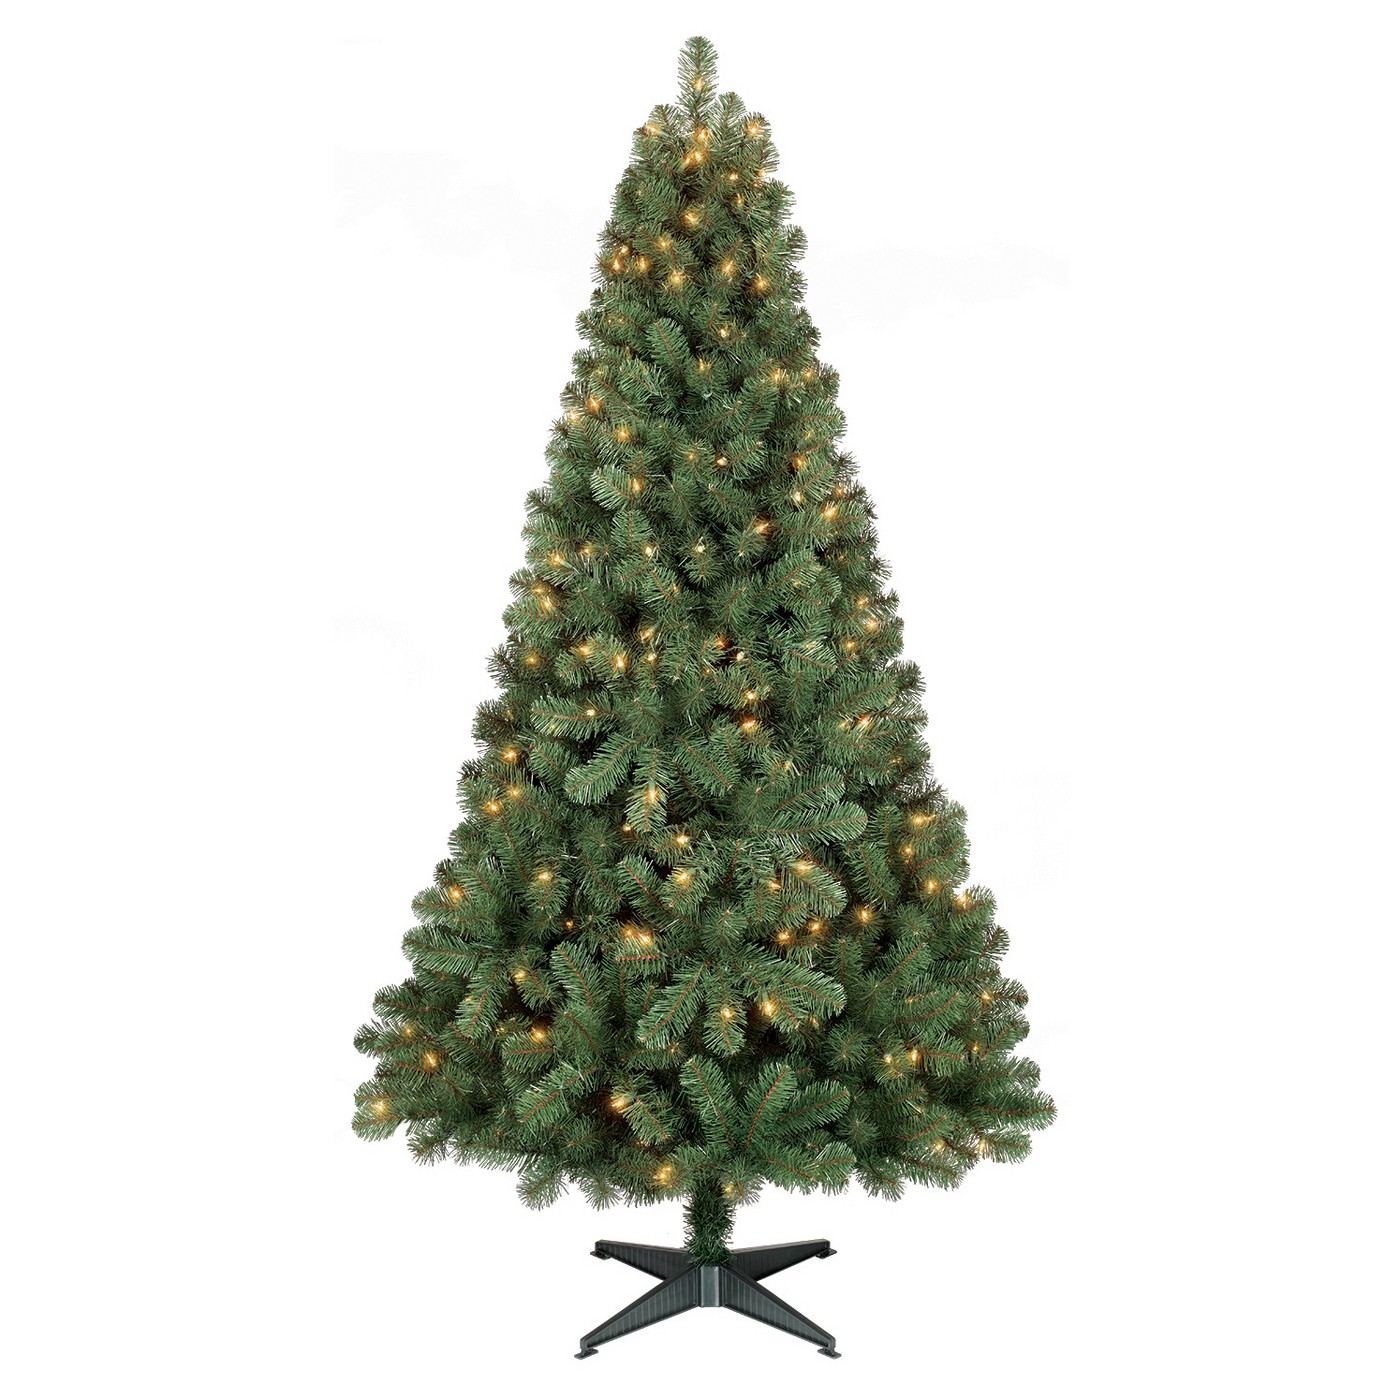 6ft Prelit Artificial Christmas Tree Alberta Spruce Clear Lights - Wondershopâ¢ - image 1 of 4